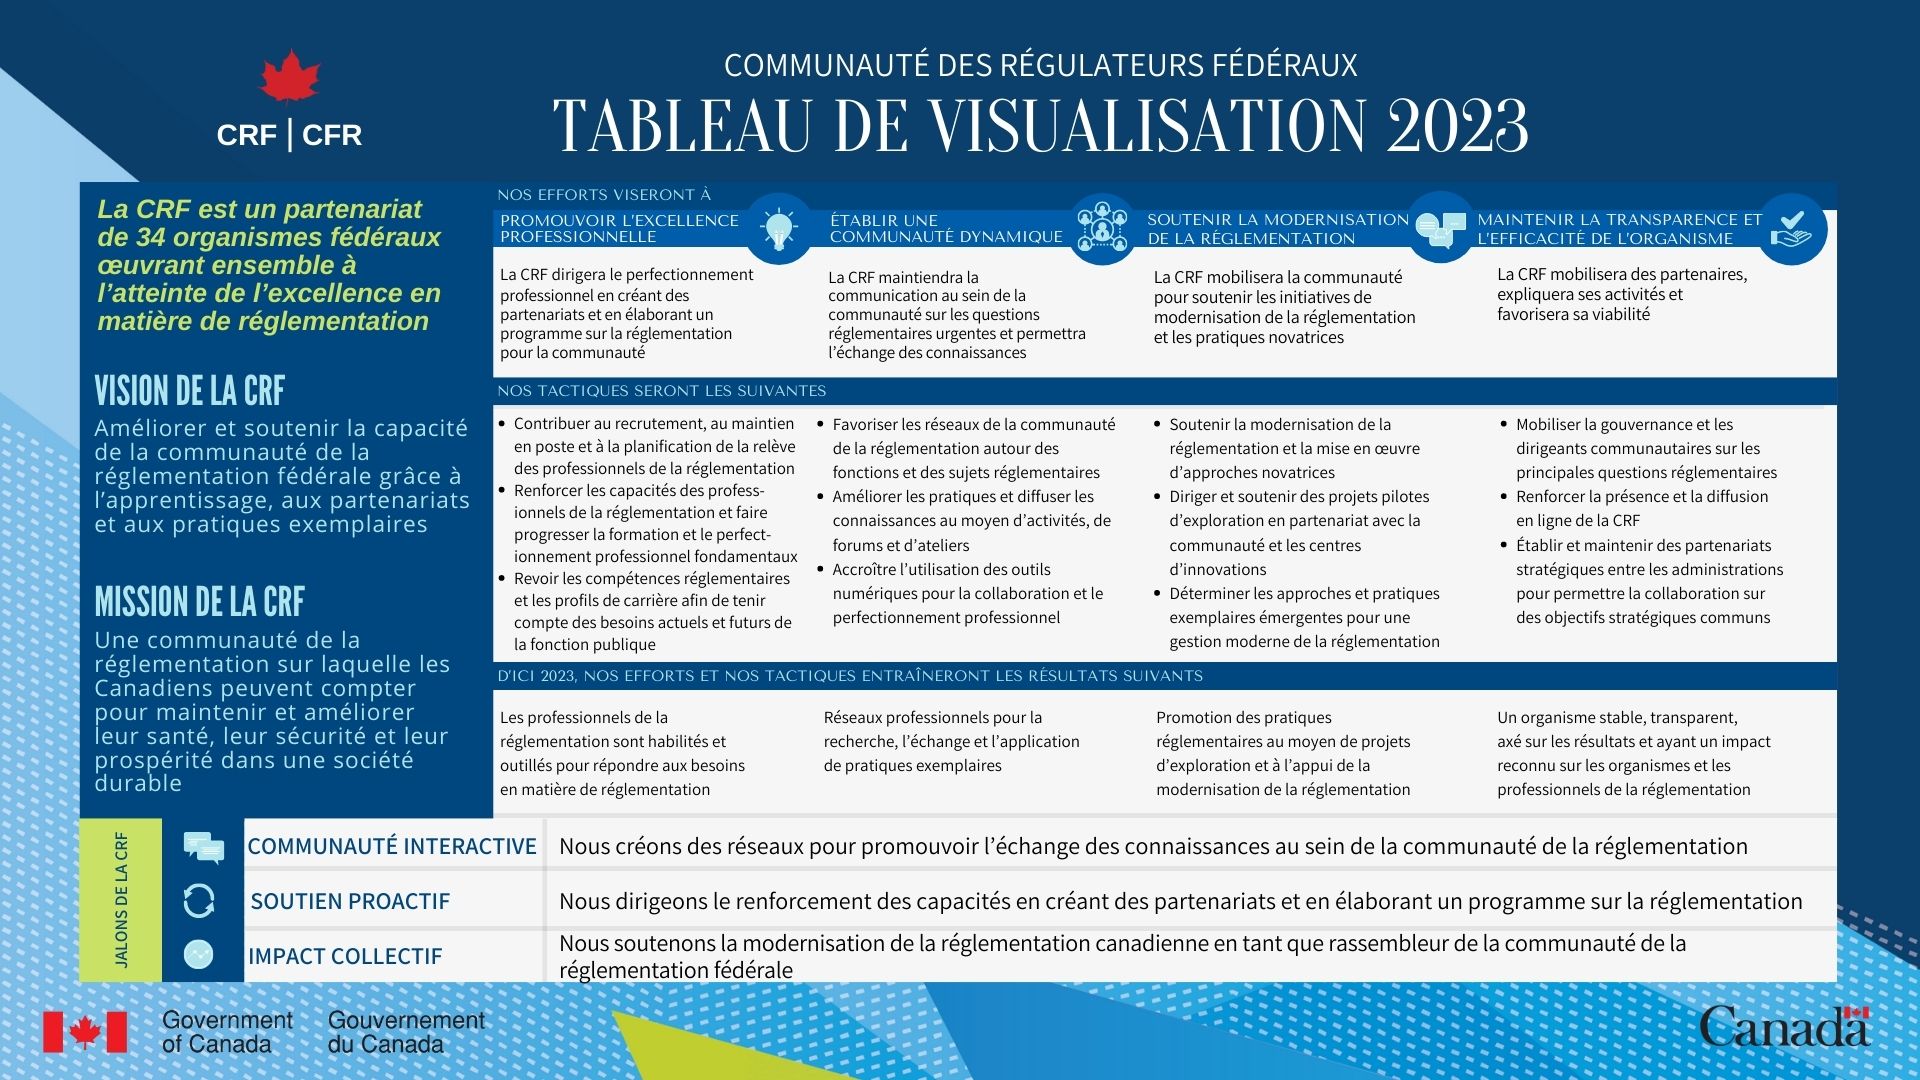 BIL CFR Business Plan 2020-2023 FR.jpg